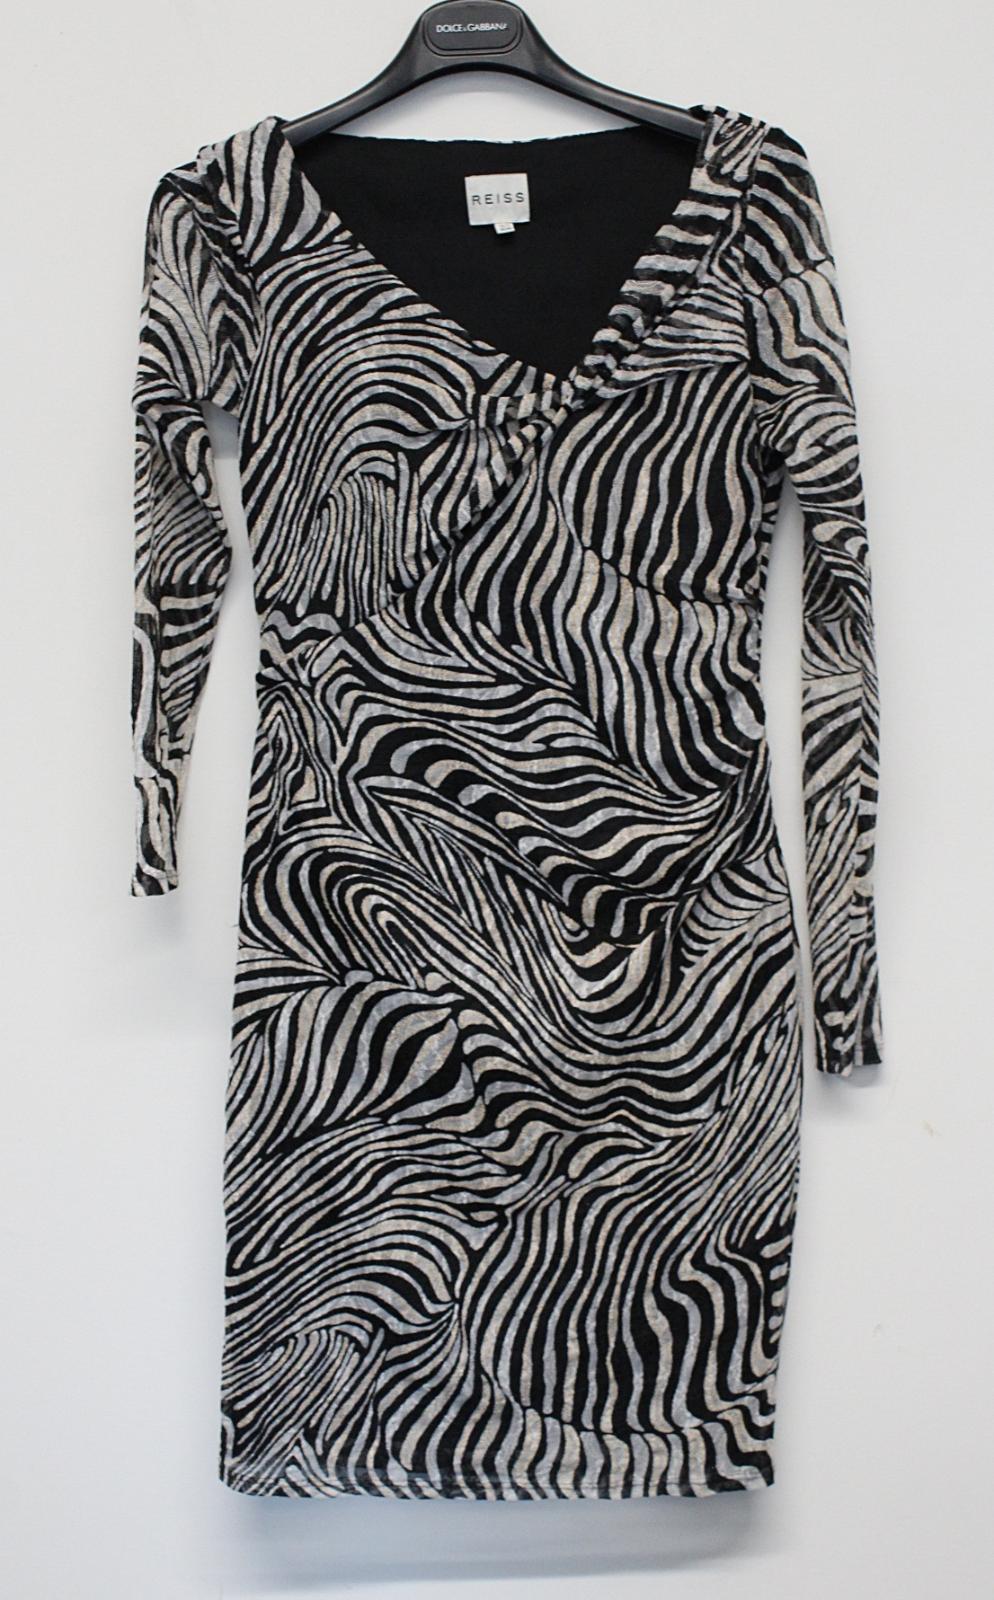 REISS Ladies Hampton Black White Zebra Print Side Zip Fitted Pencil Dress UK10